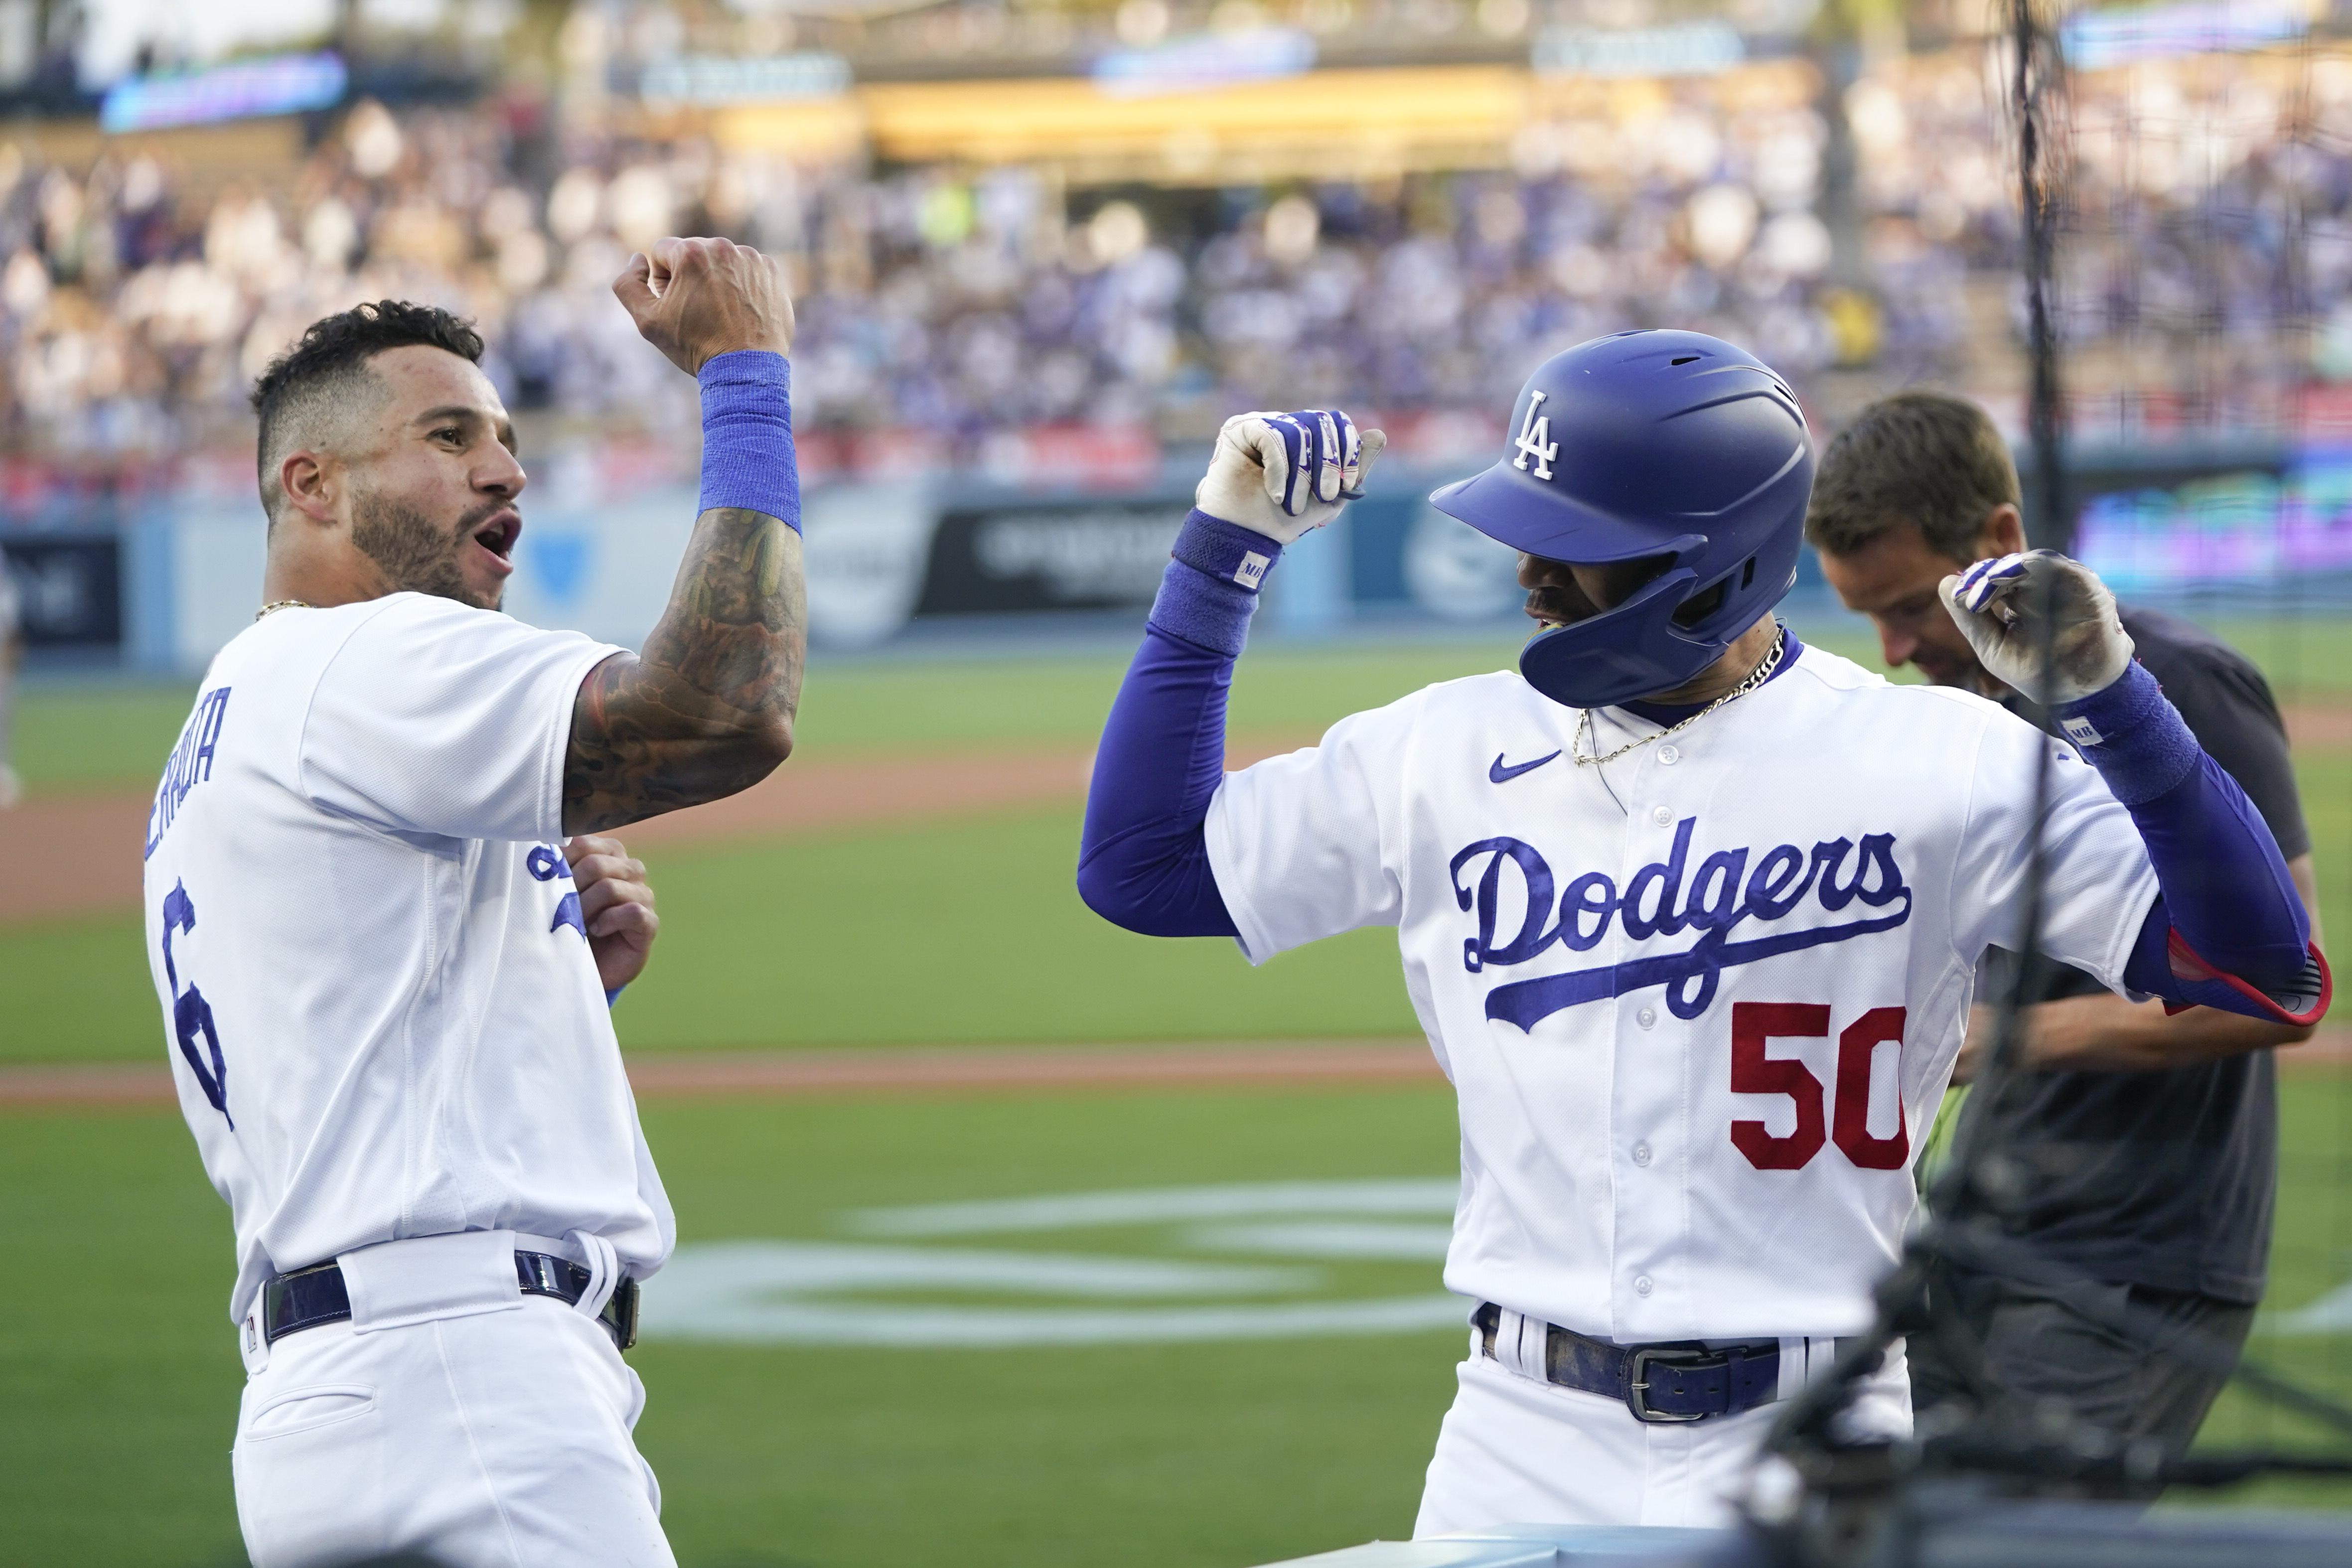 Dodgers take 2 behind hot-hitting Betts